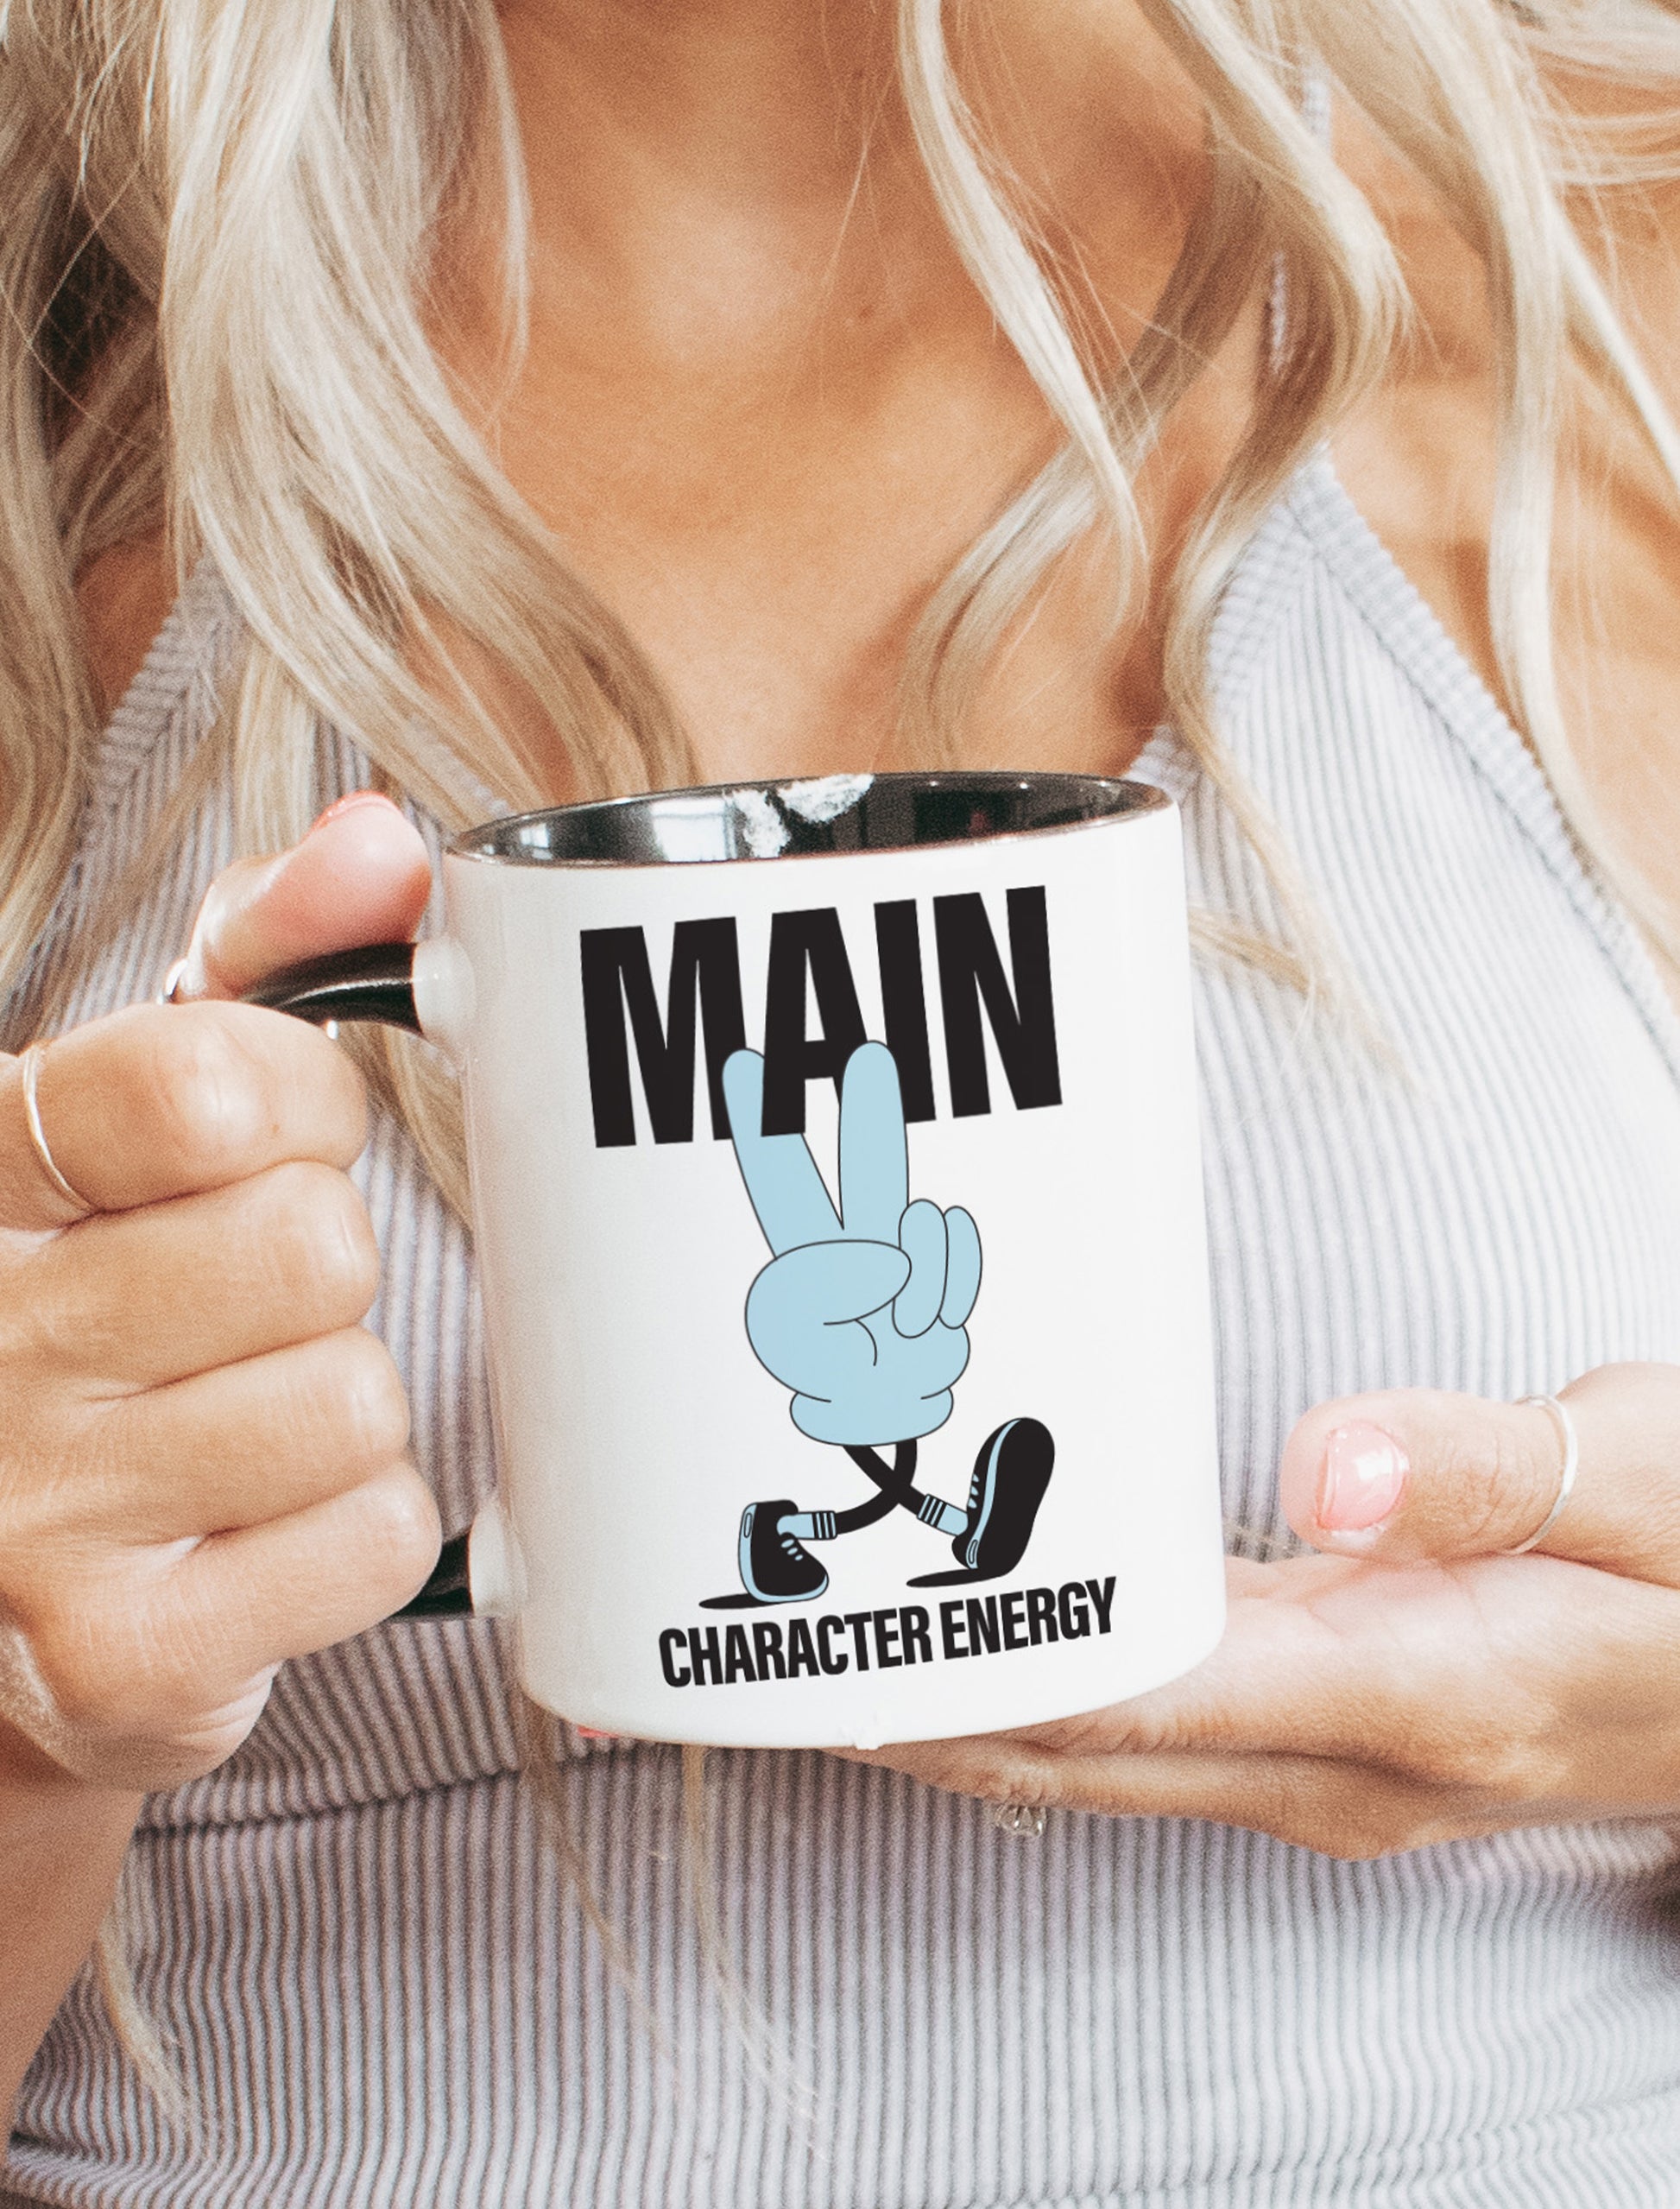 Main character energy blue mug. energy affirmations